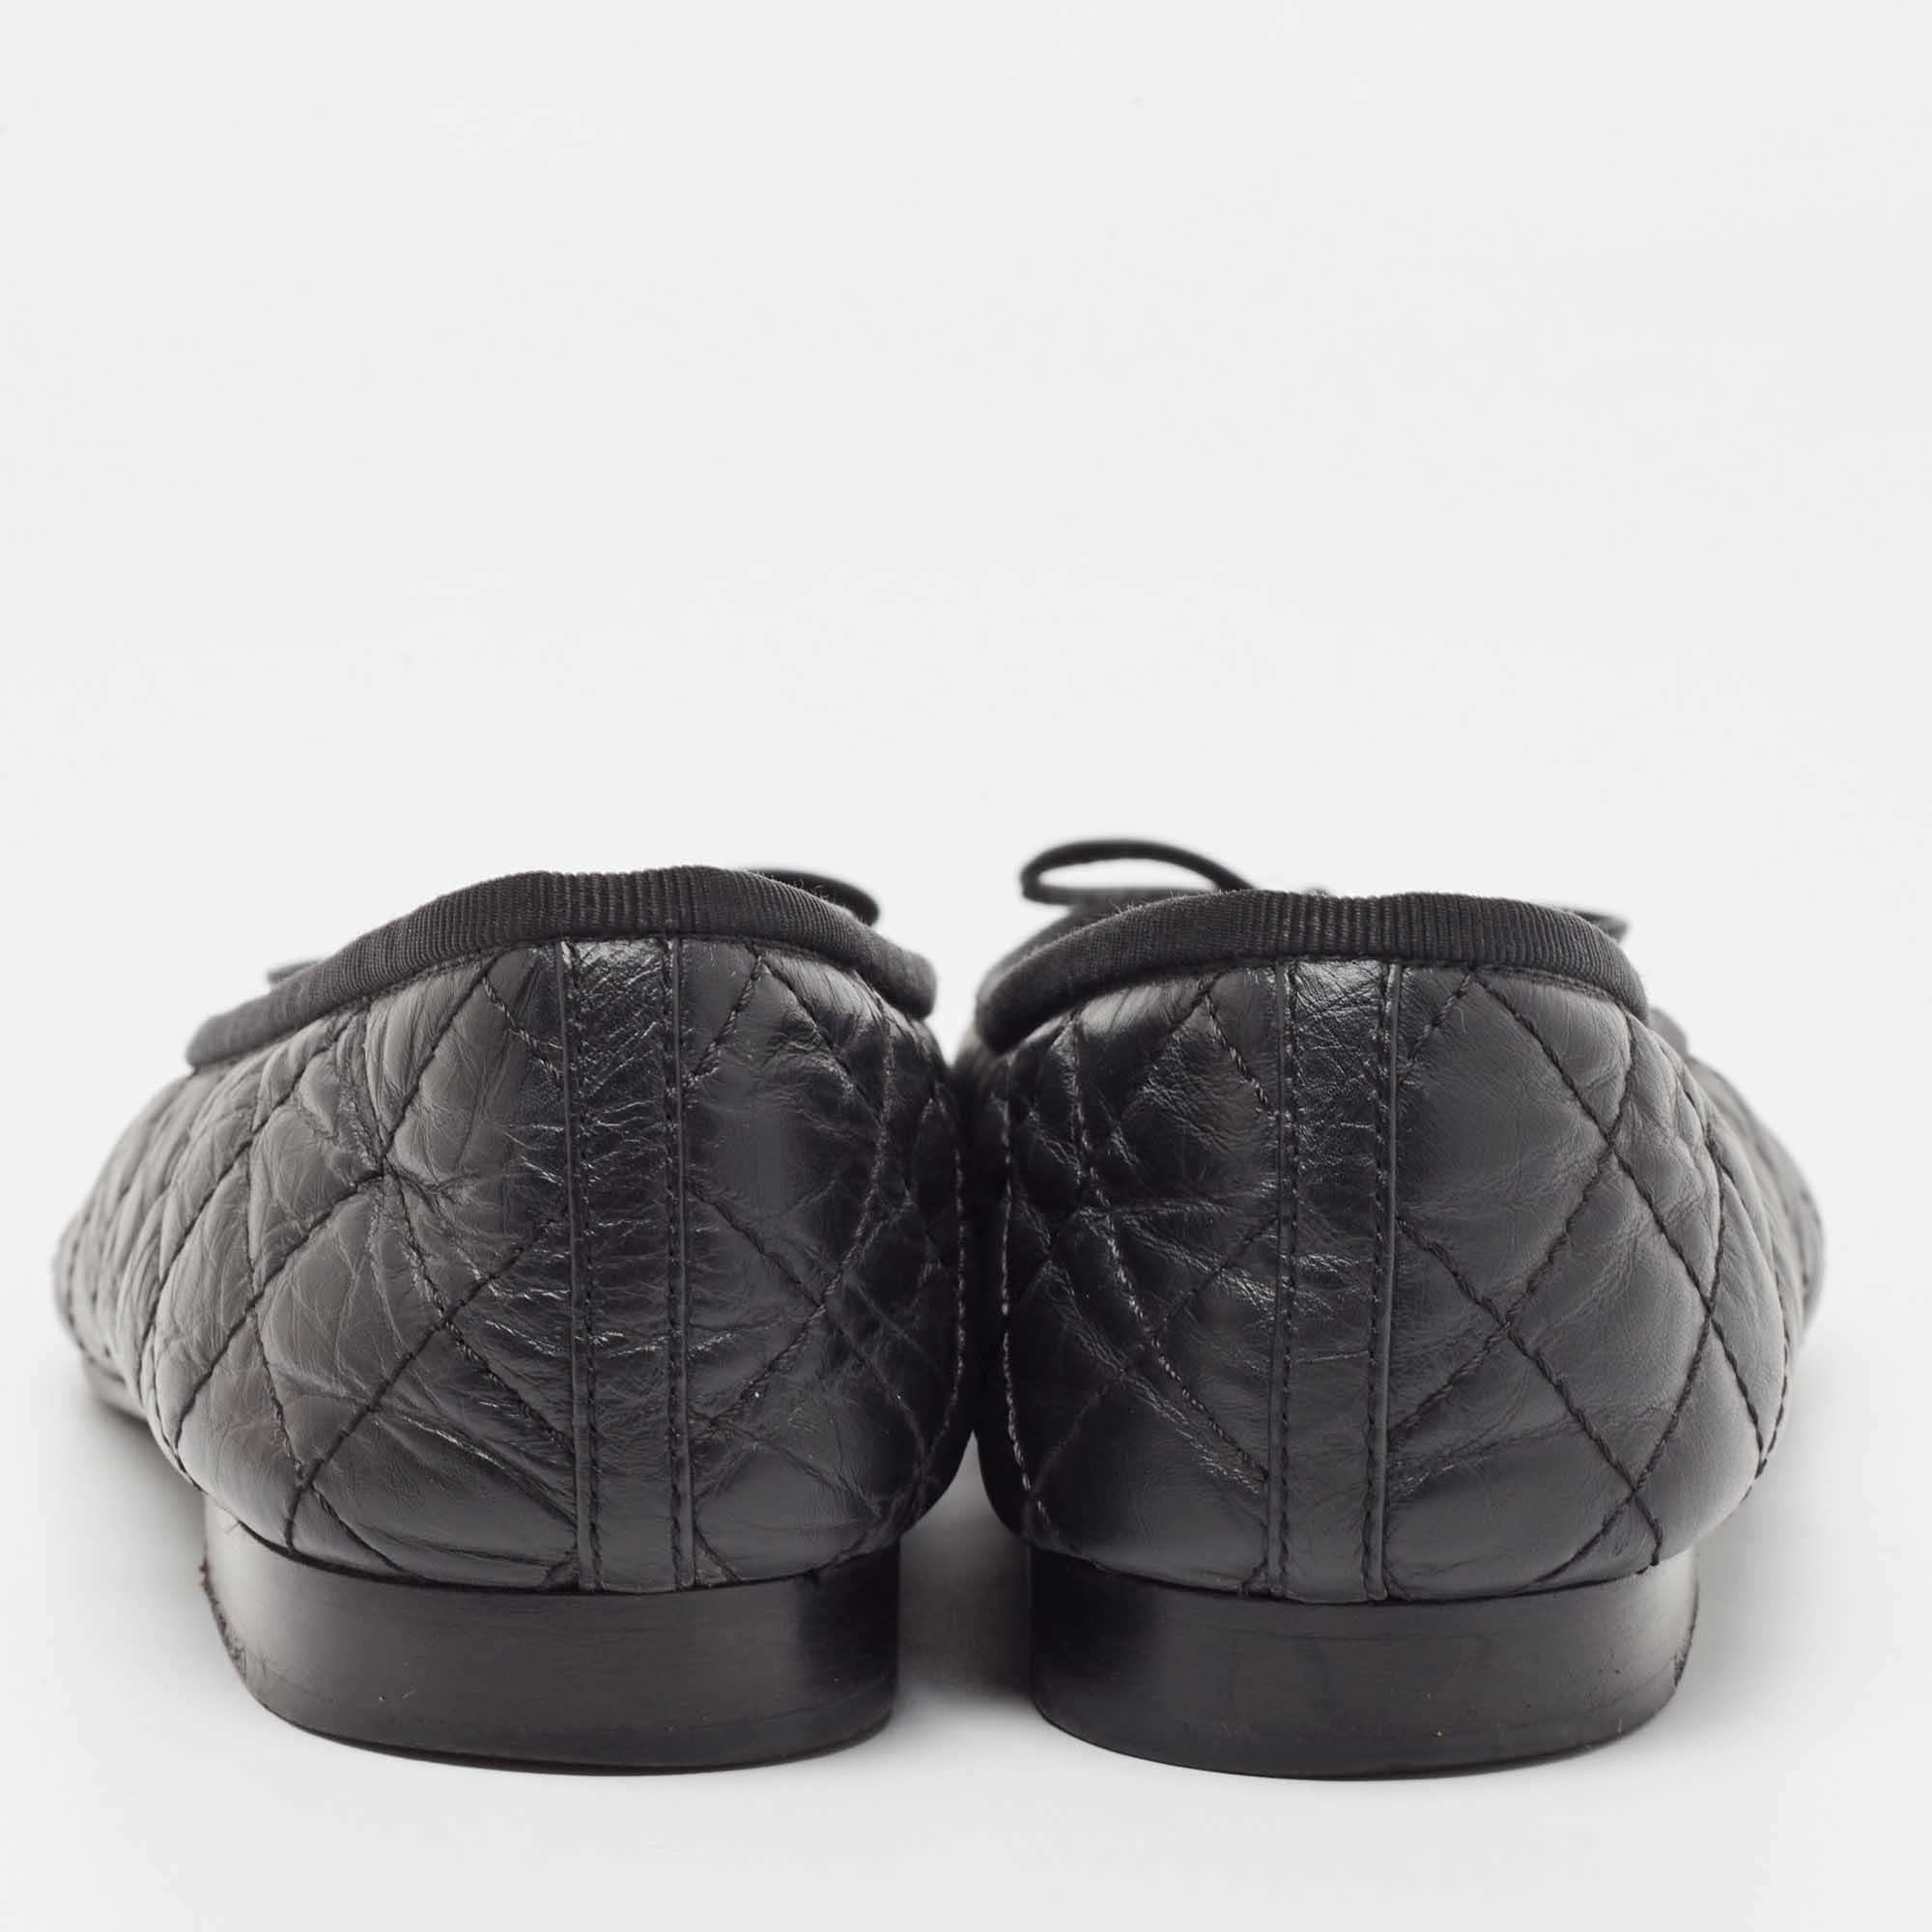 Chanel Black Leather CC Ballet Flats Size 39